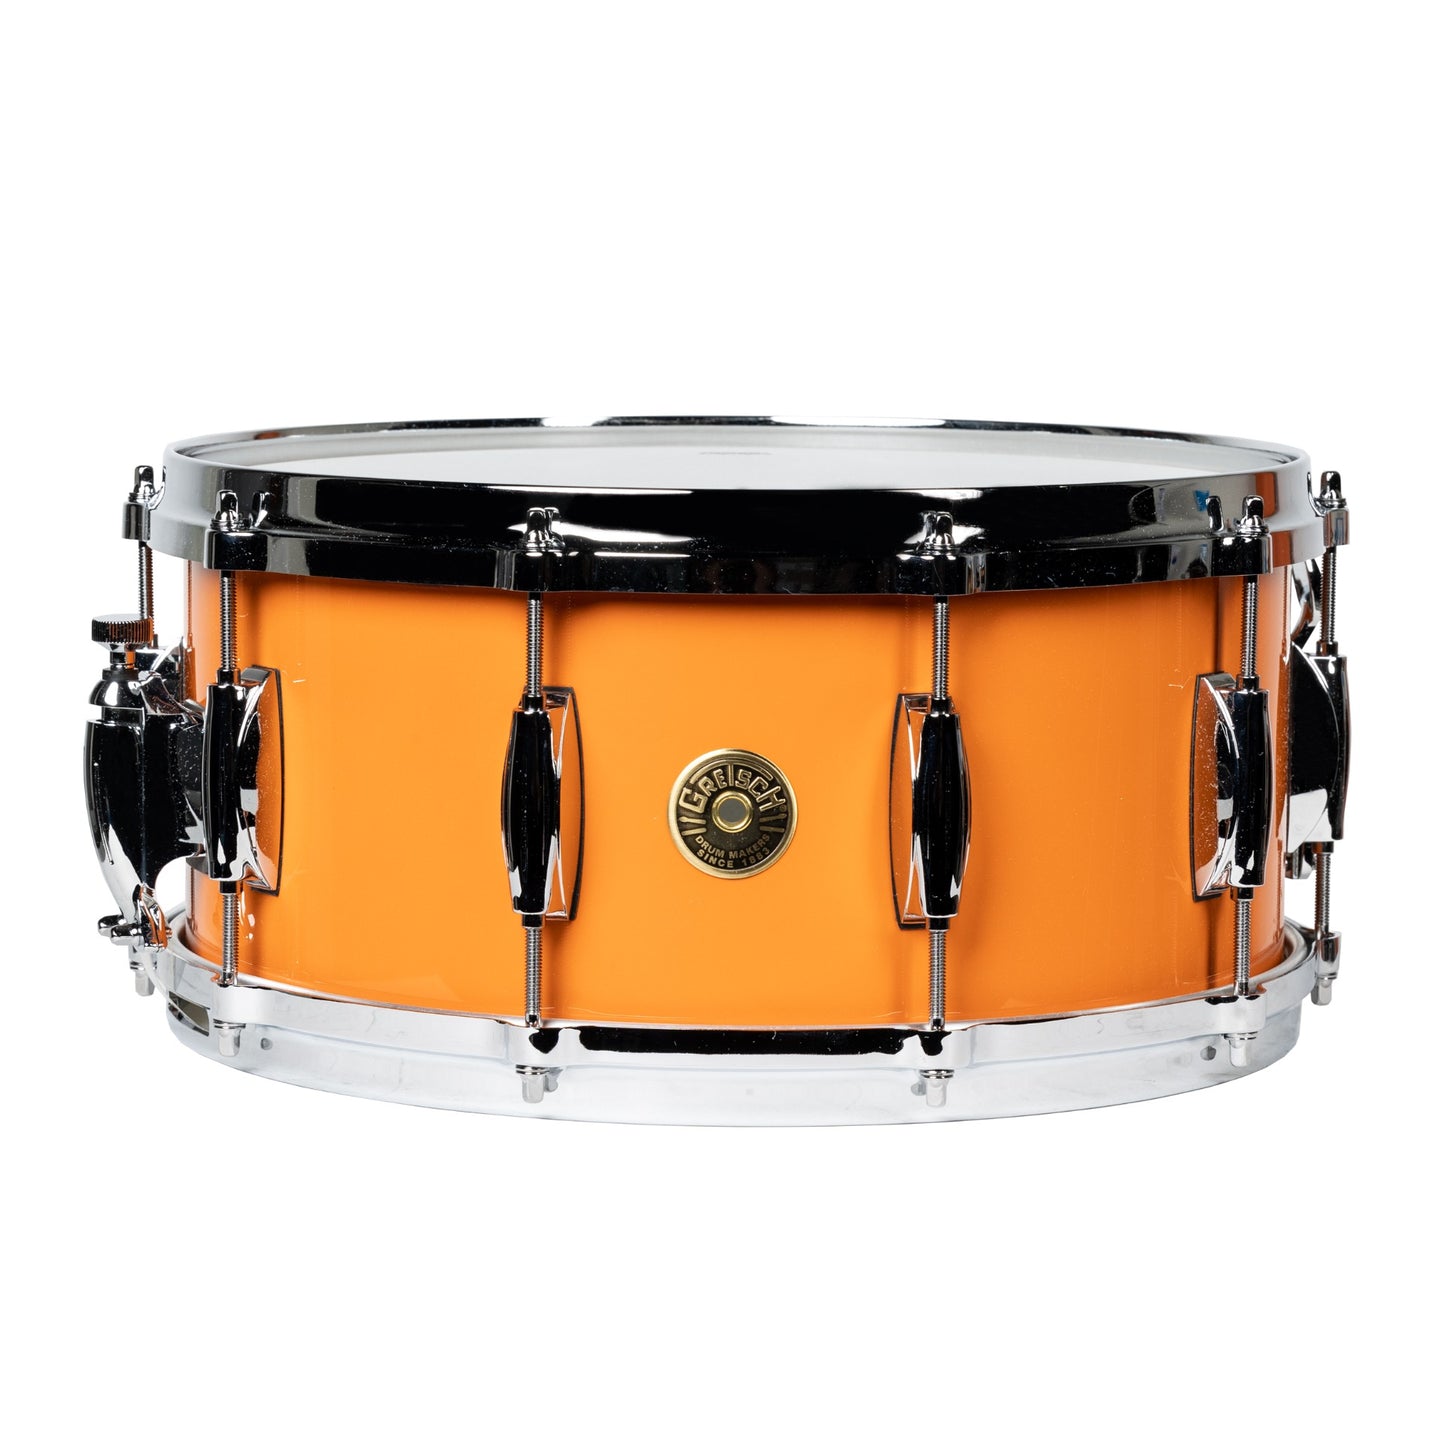 Gretsch USA Custom 5x14 Snare Drum - Satin Natural